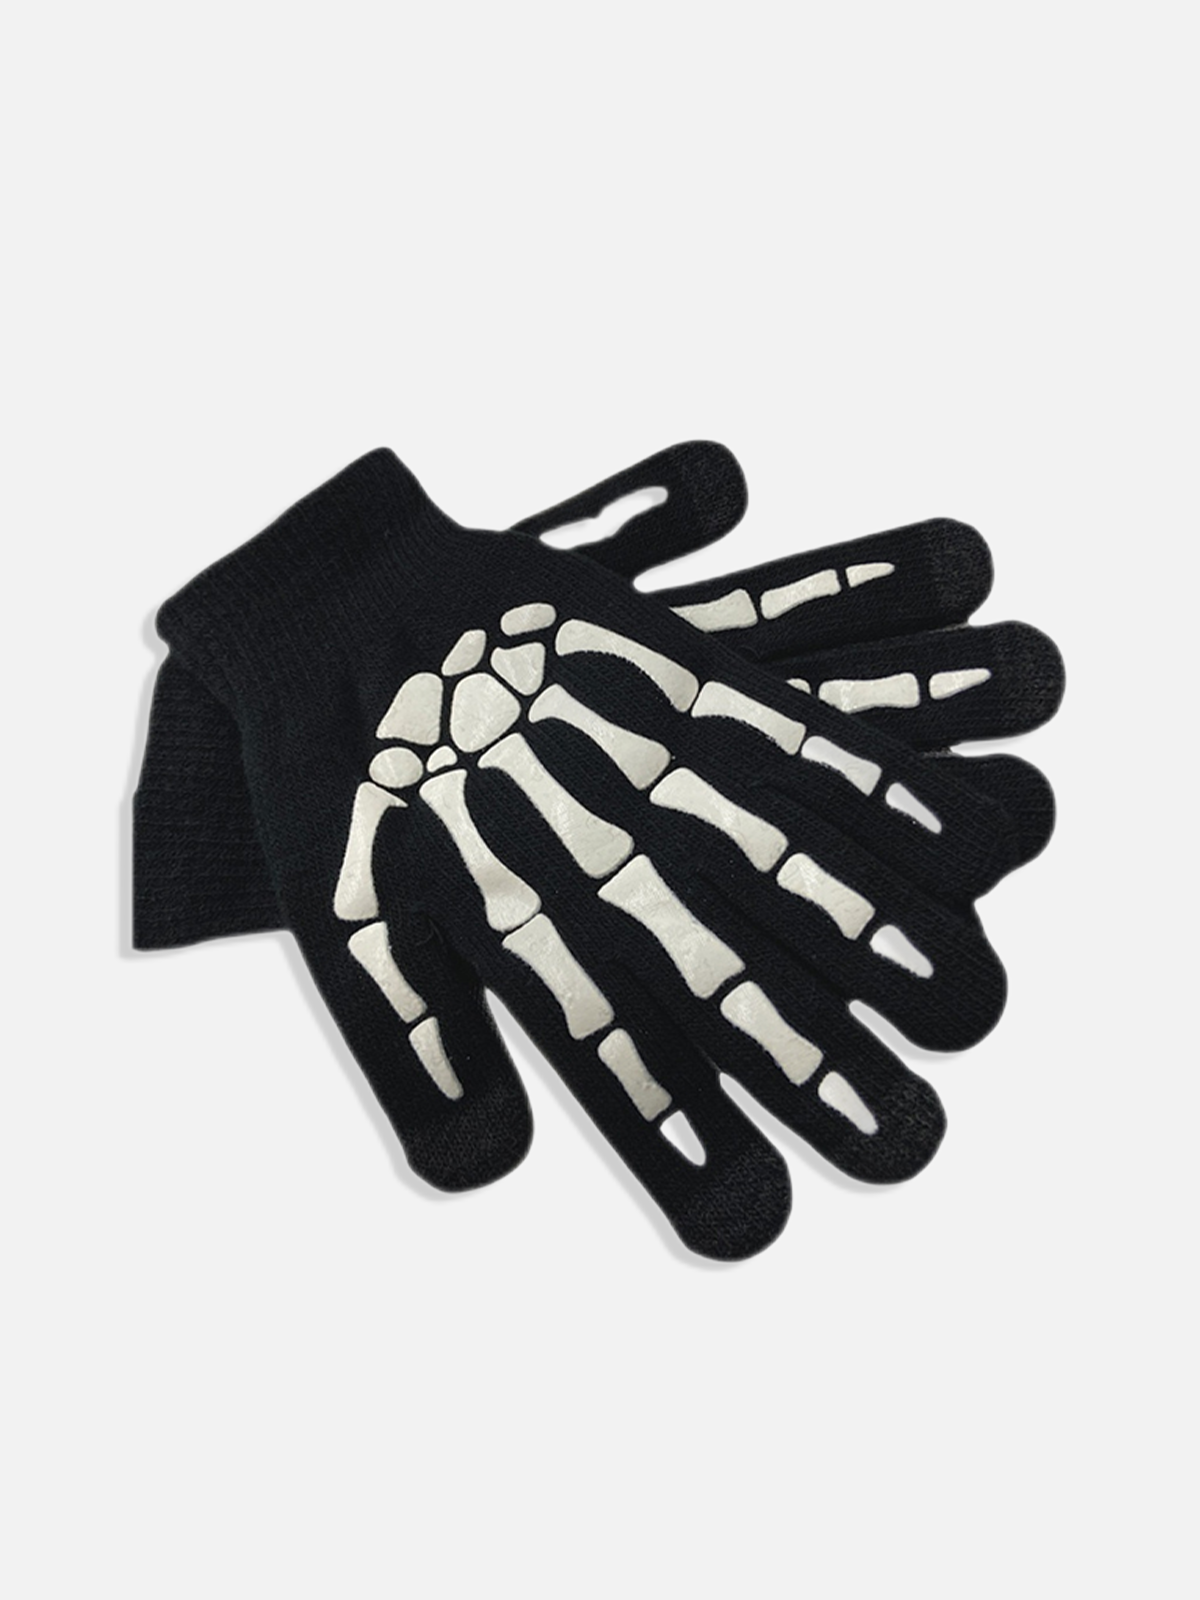 Faire Echo Skeleton Gloves Faire Echo